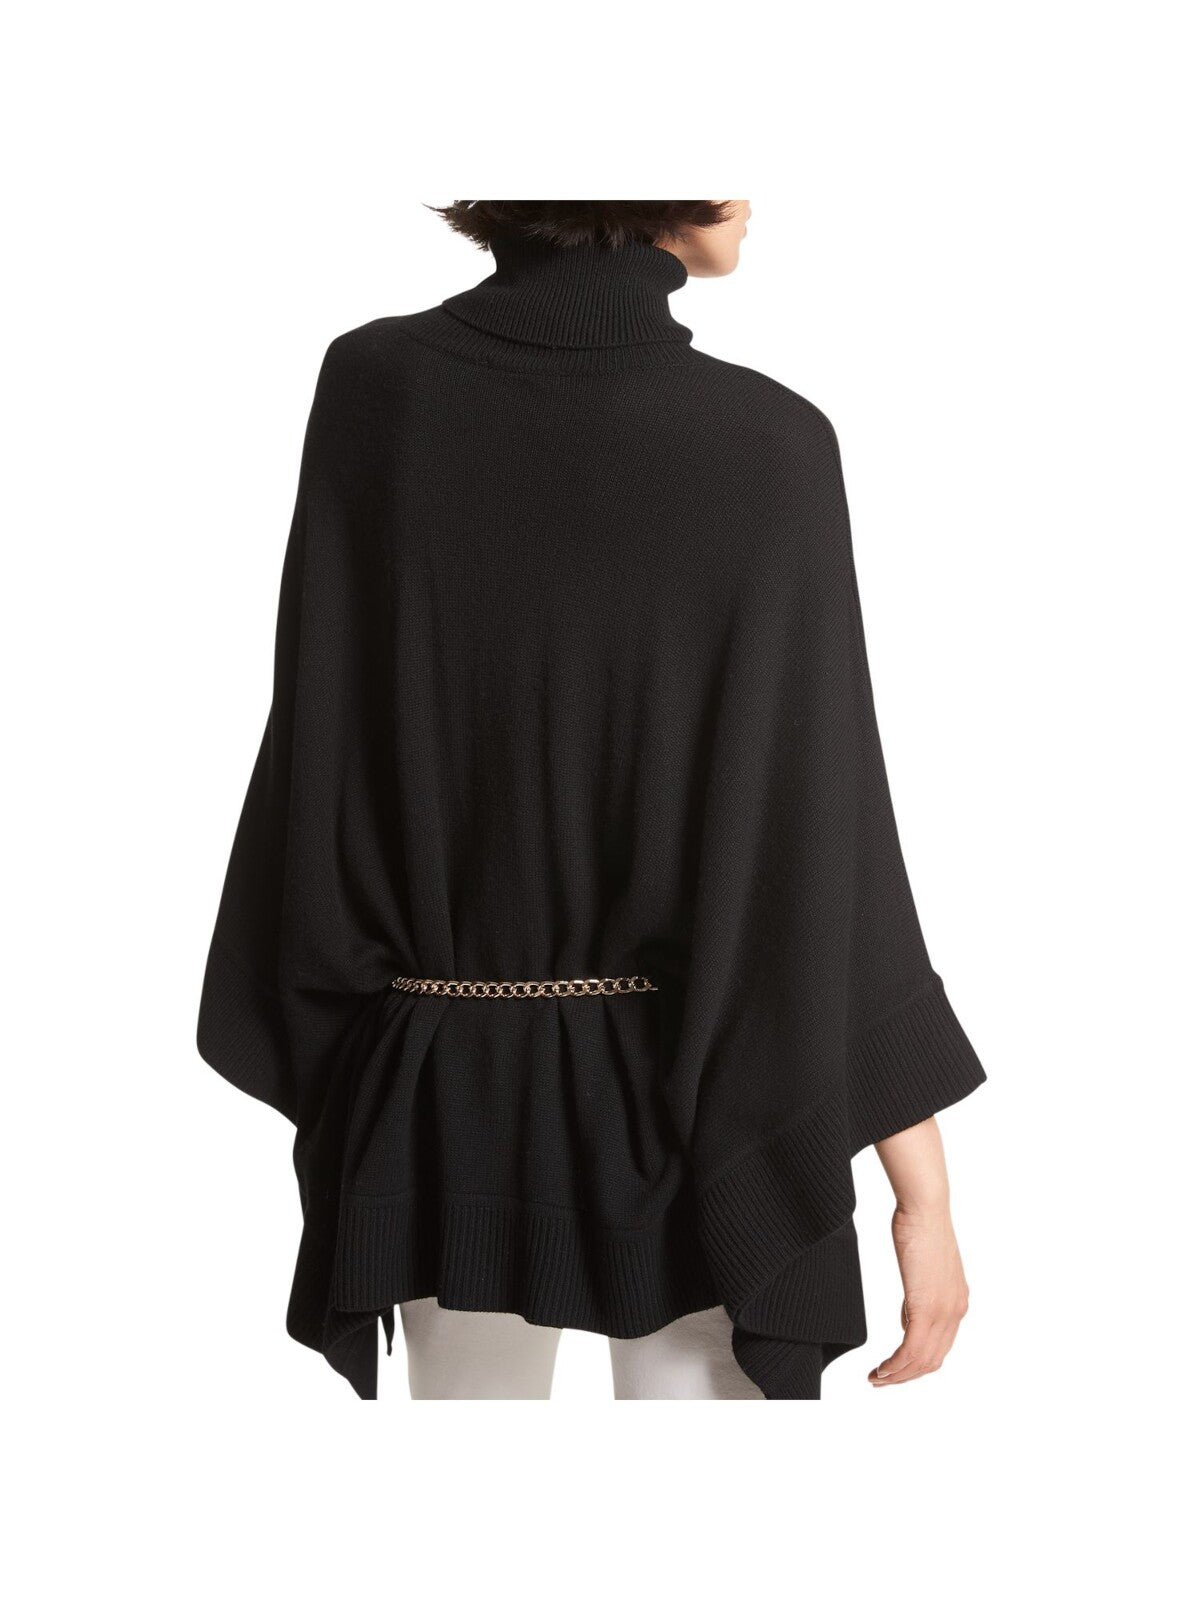 MICHAEL MICHAEL KORS Womens Black Ribbed Long Sleeve Turtle Neck PONCHO Sweater S\M